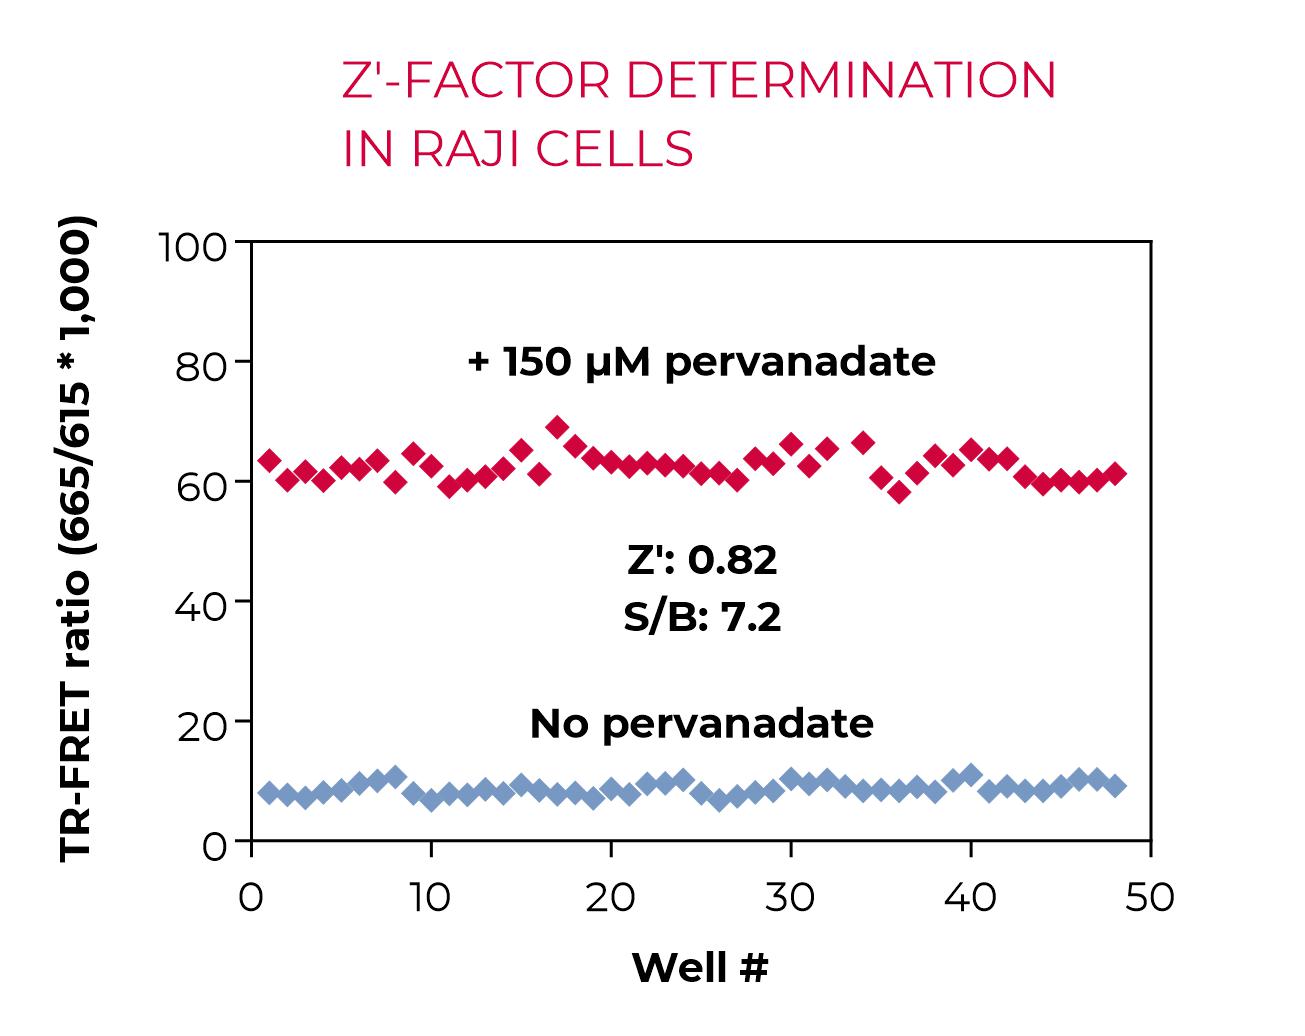 Z'-factor determination in Raji cells